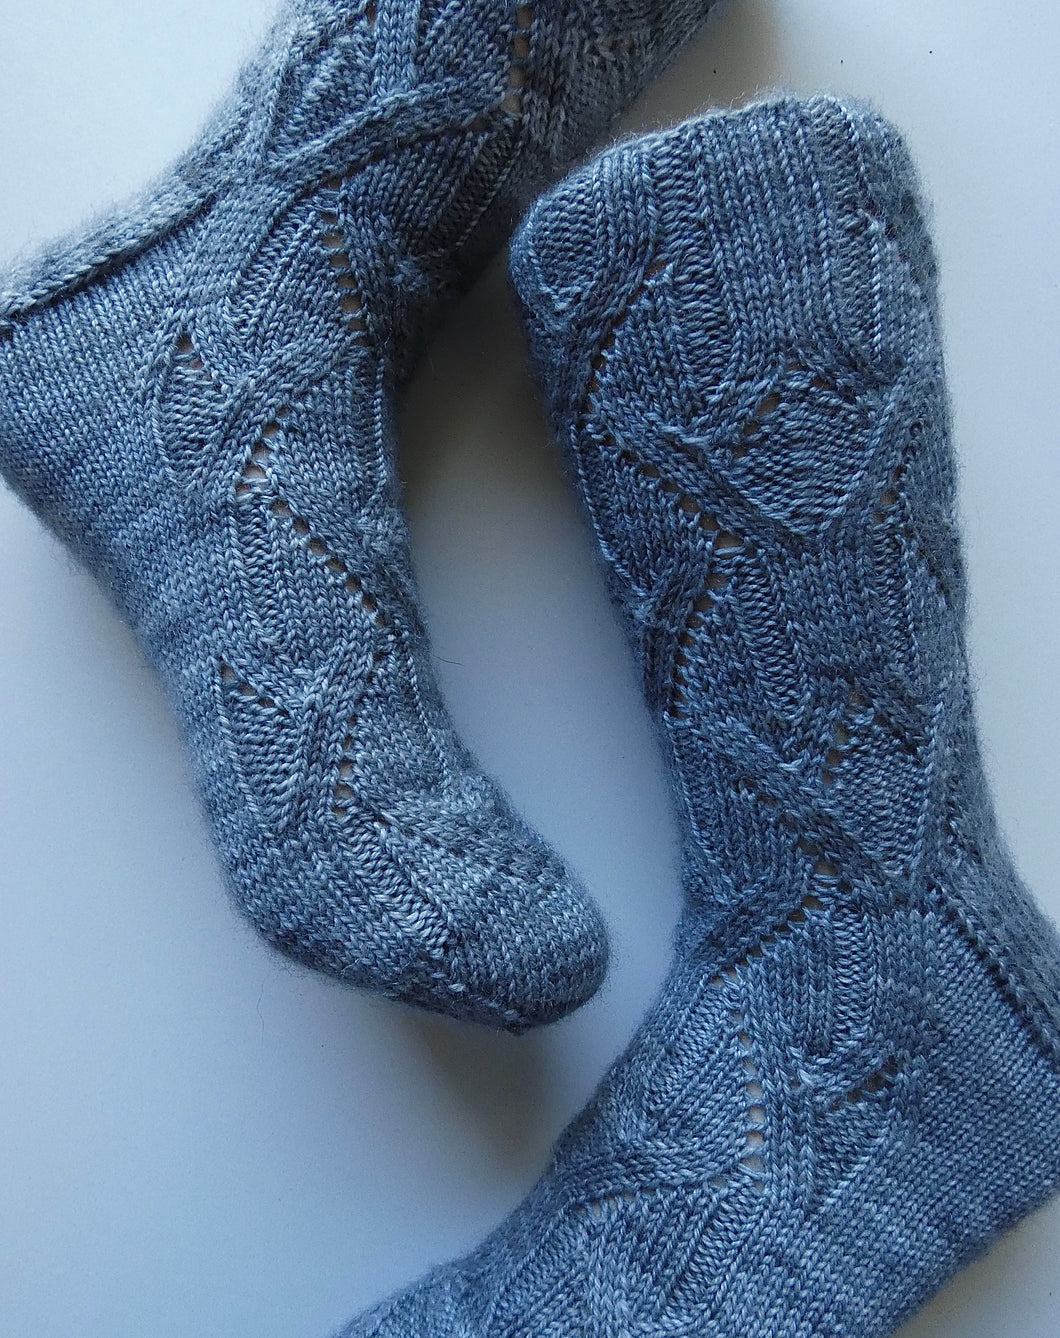 Interweaving Socks